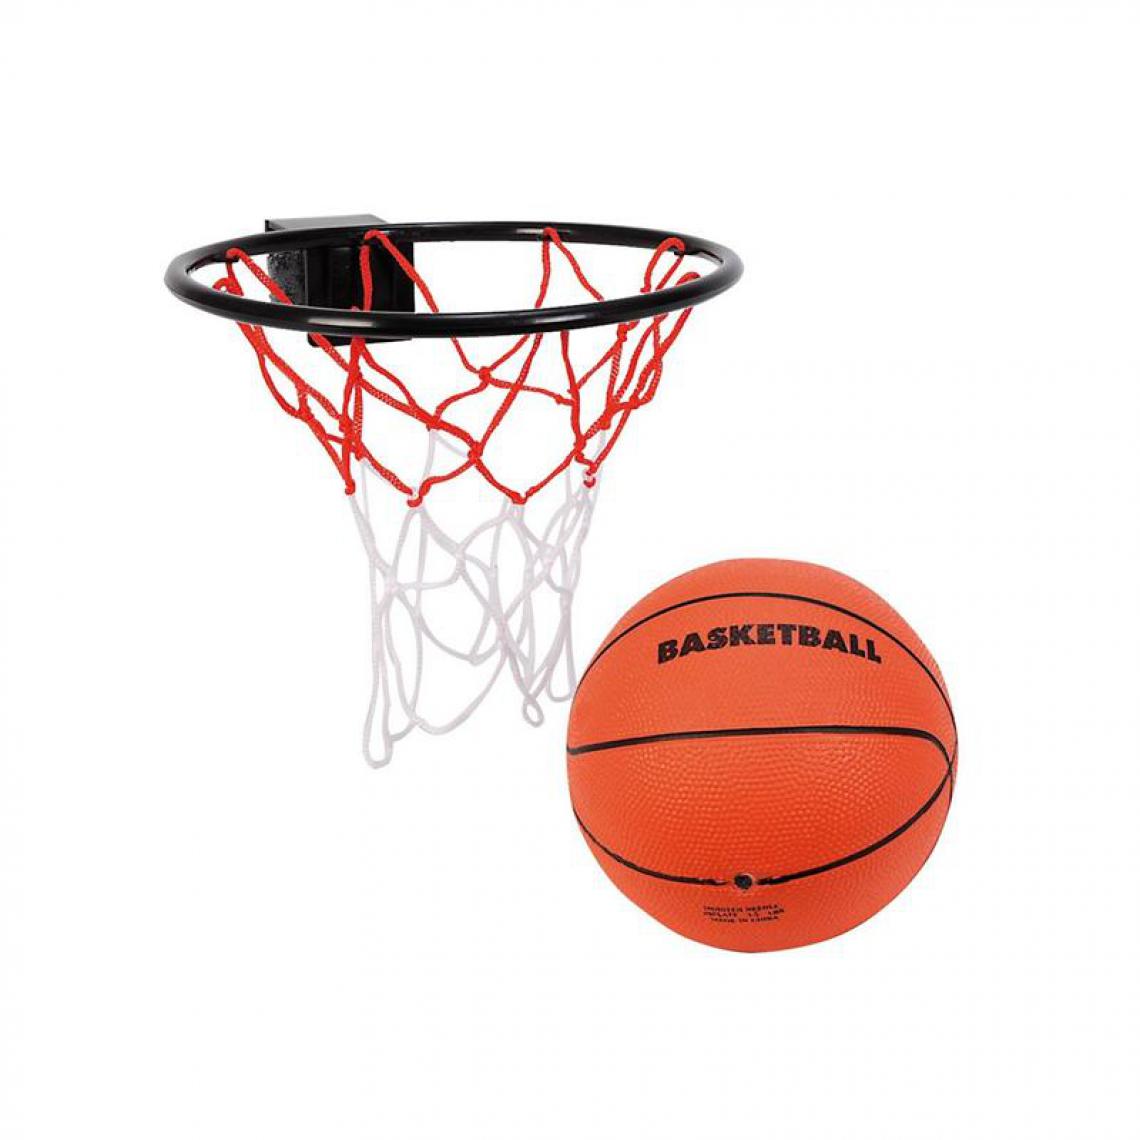 Simba Toys - Simba Toys 107400675 - Mini Basket ball Set - Jeux de récréation